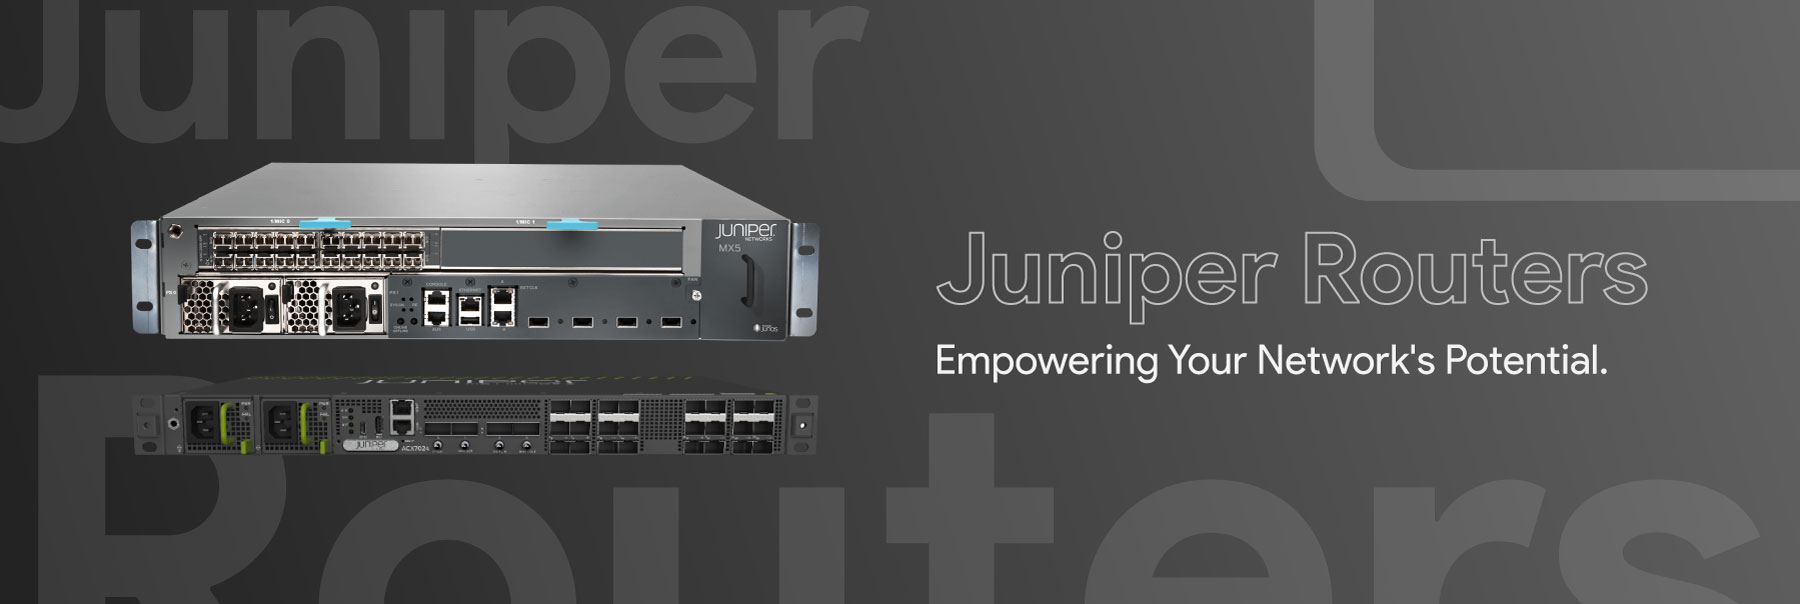 juniper routers